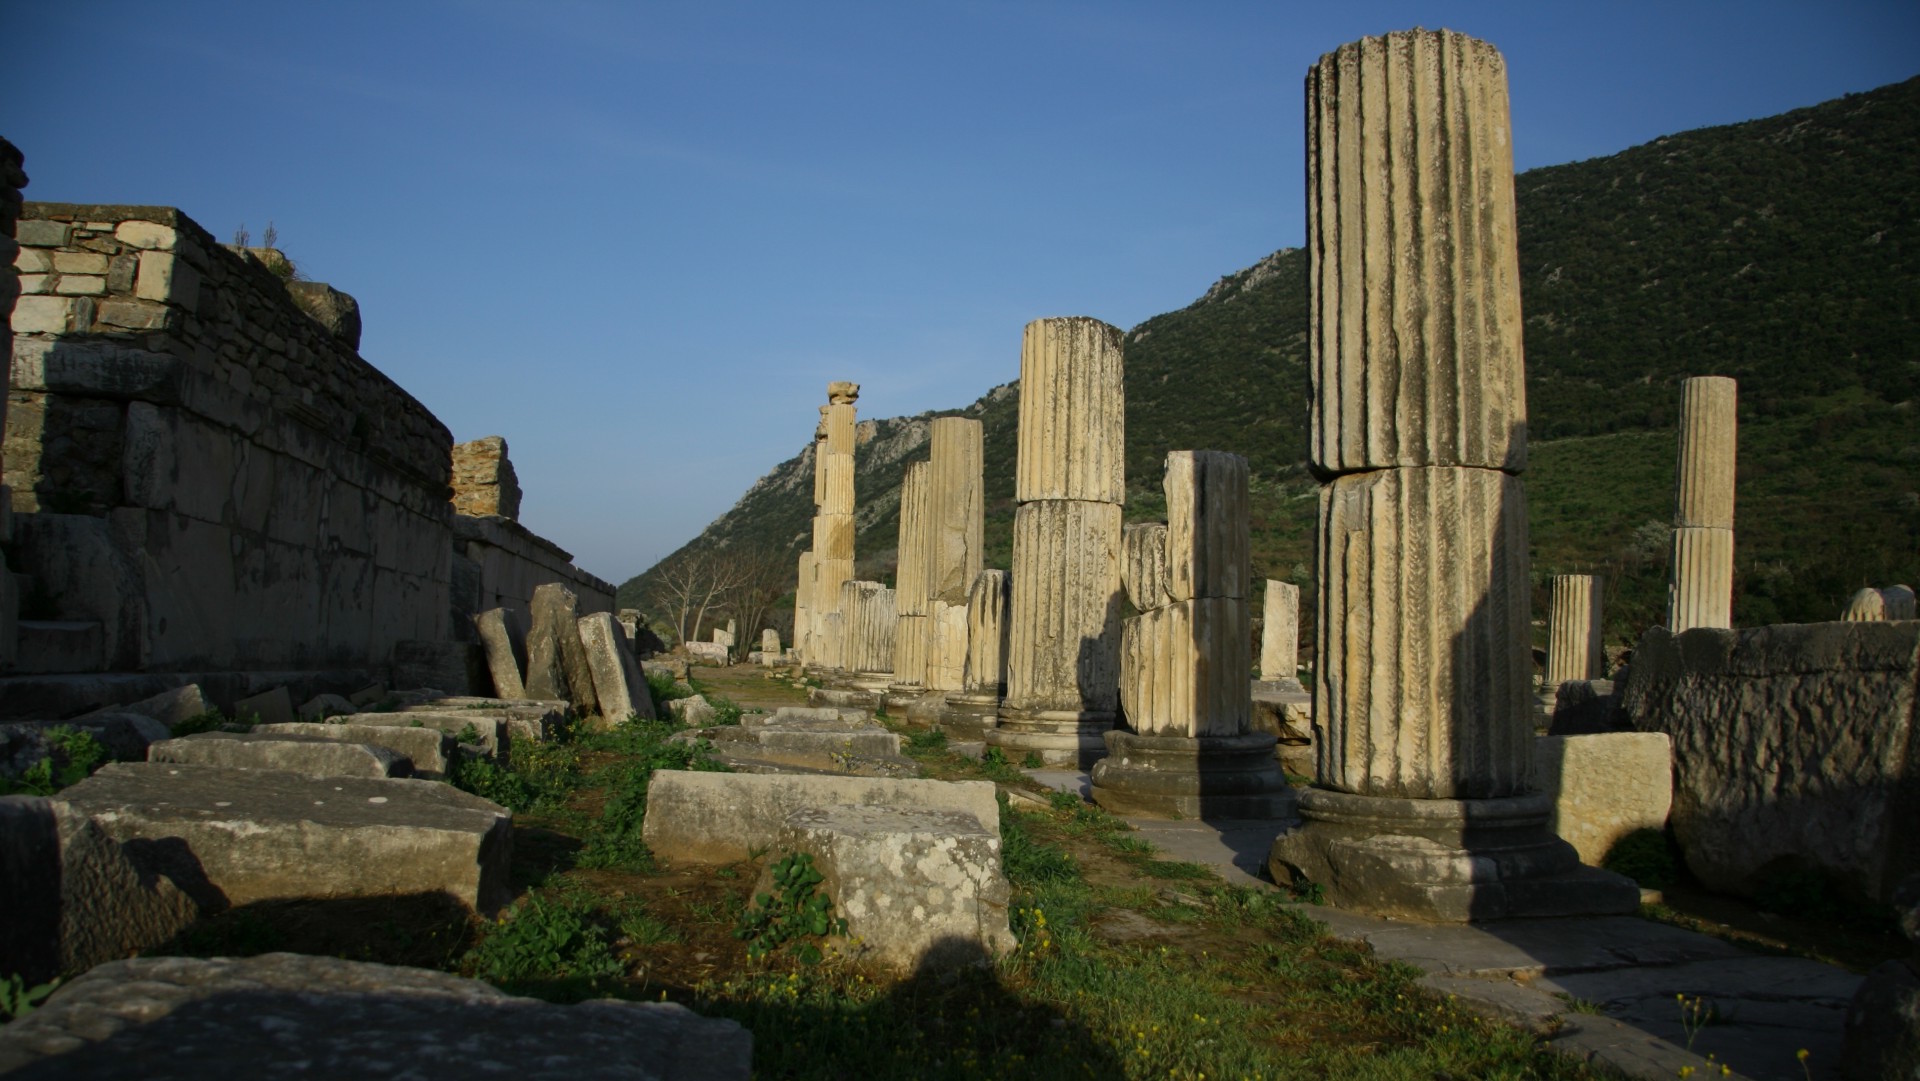 Christianity Enters Ephesus